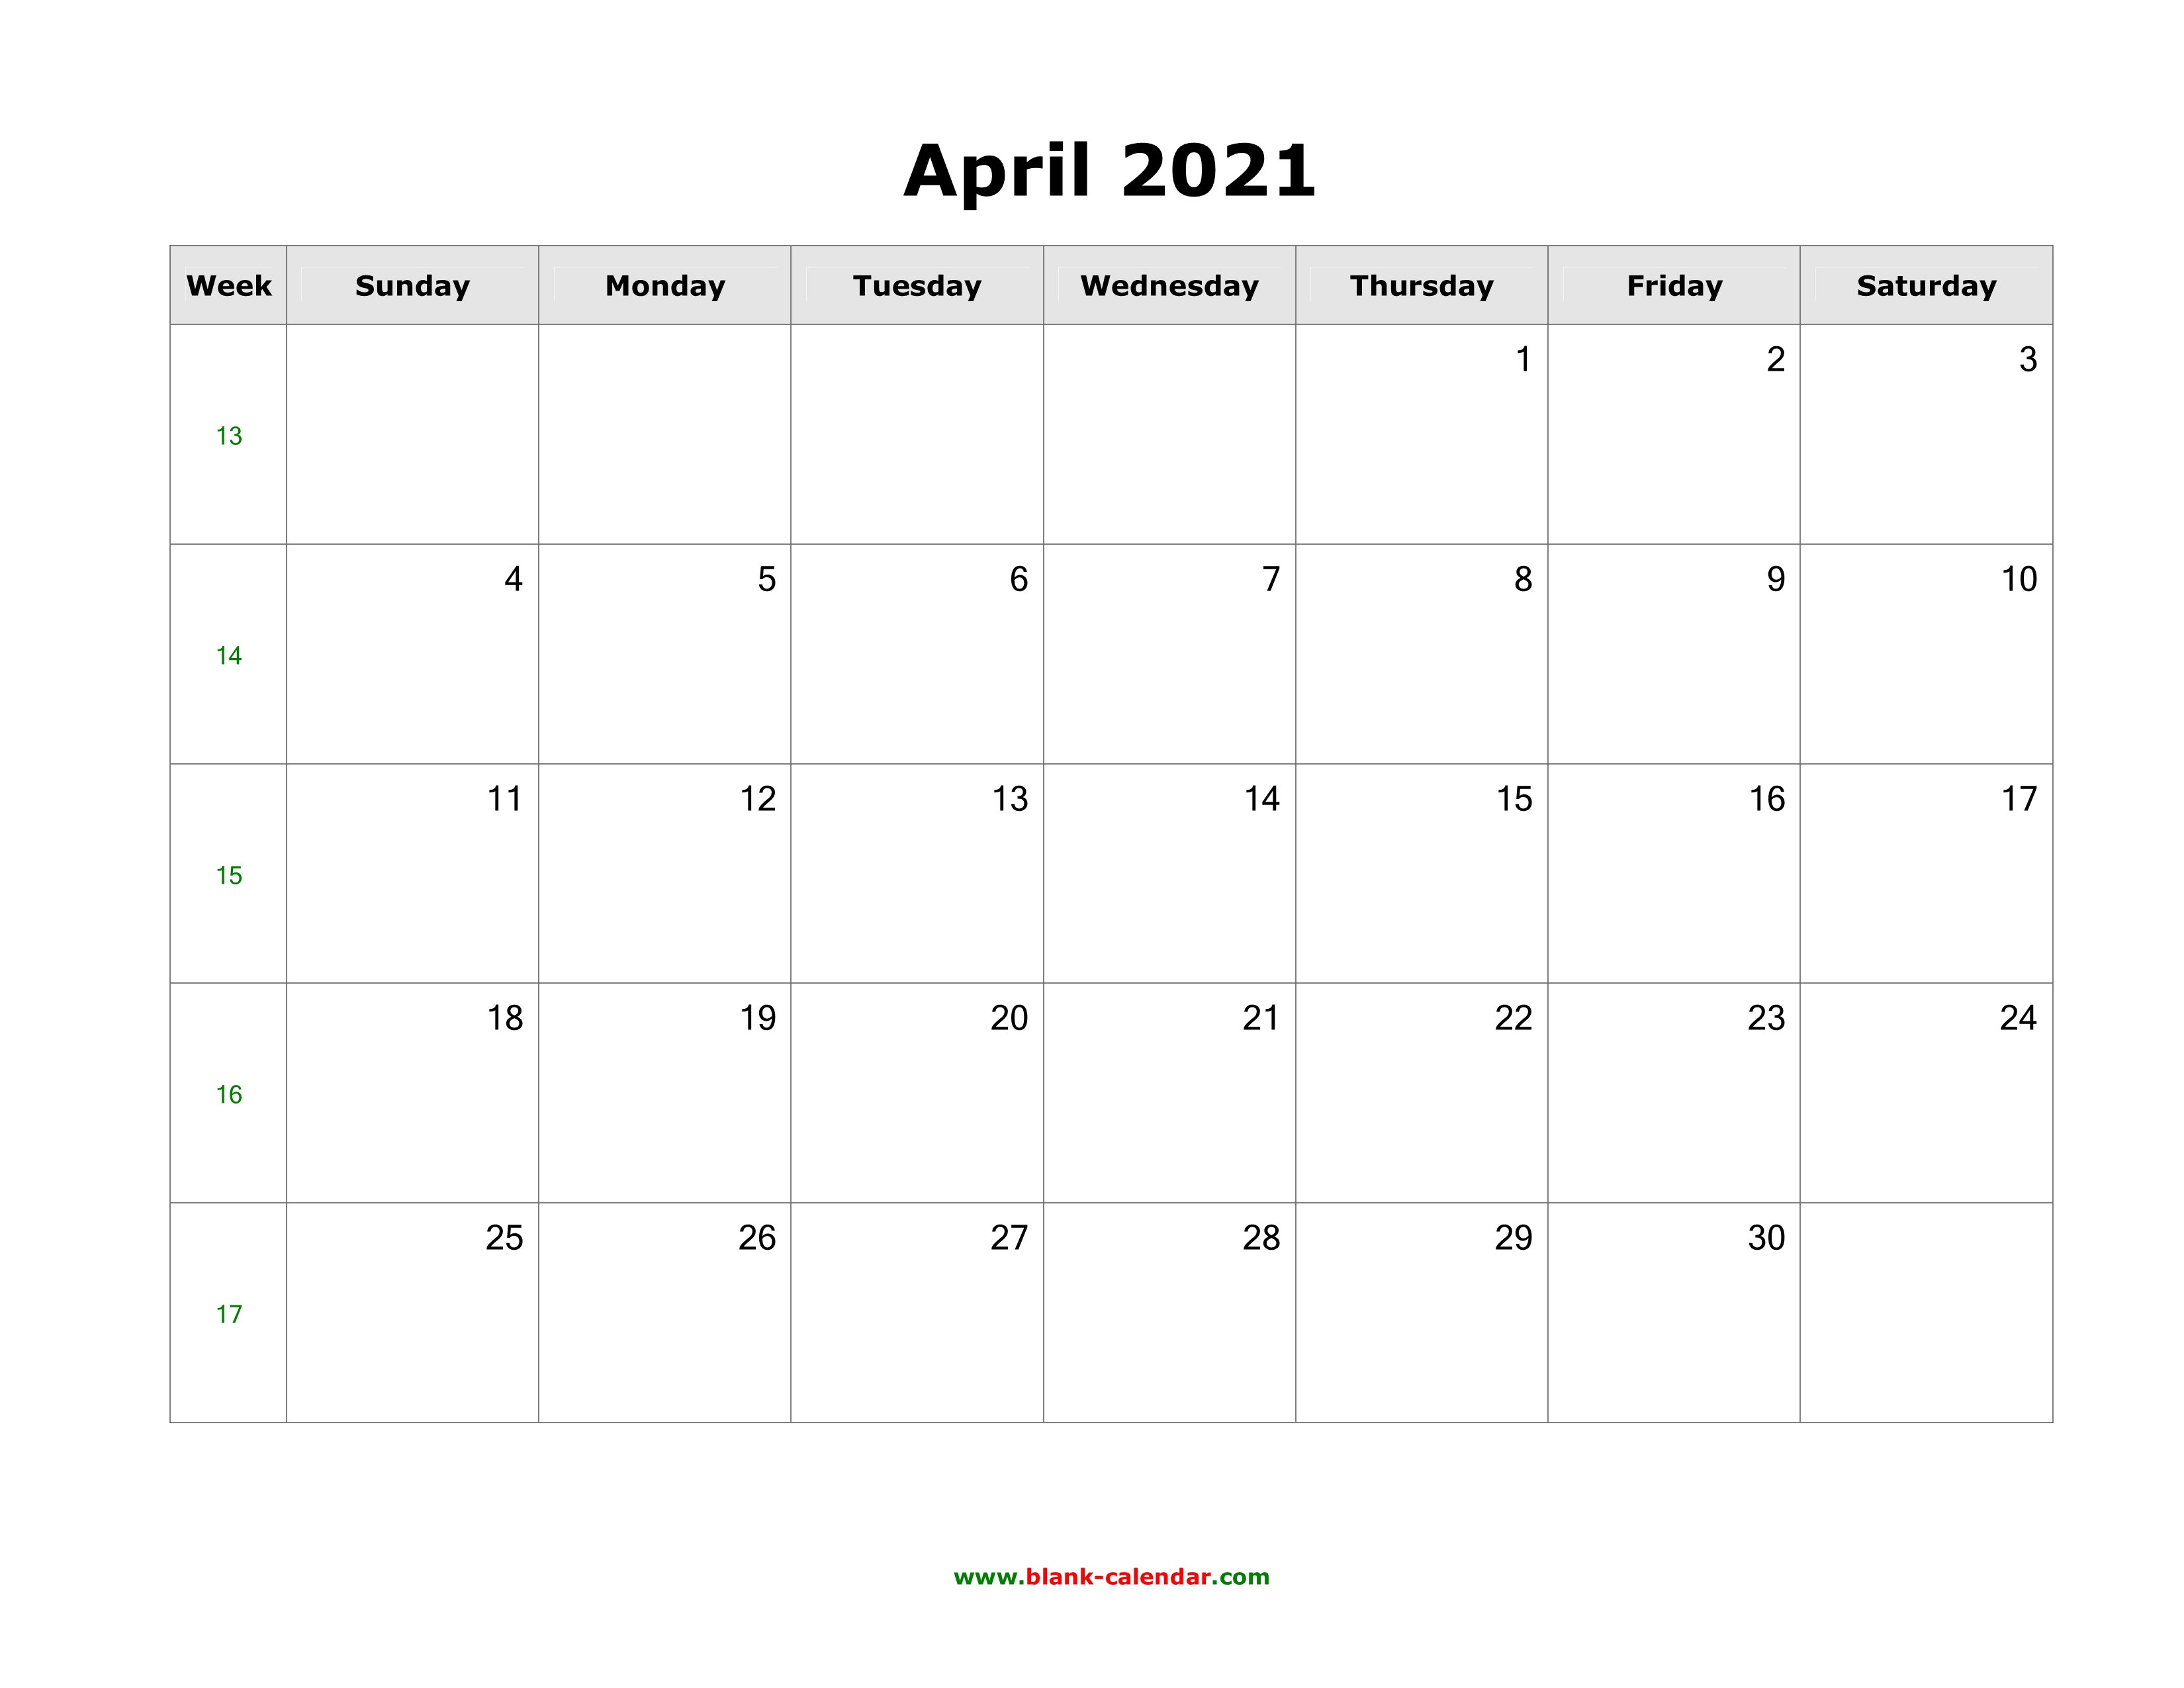 Download April 2021 Blank Calendar (horizontal)